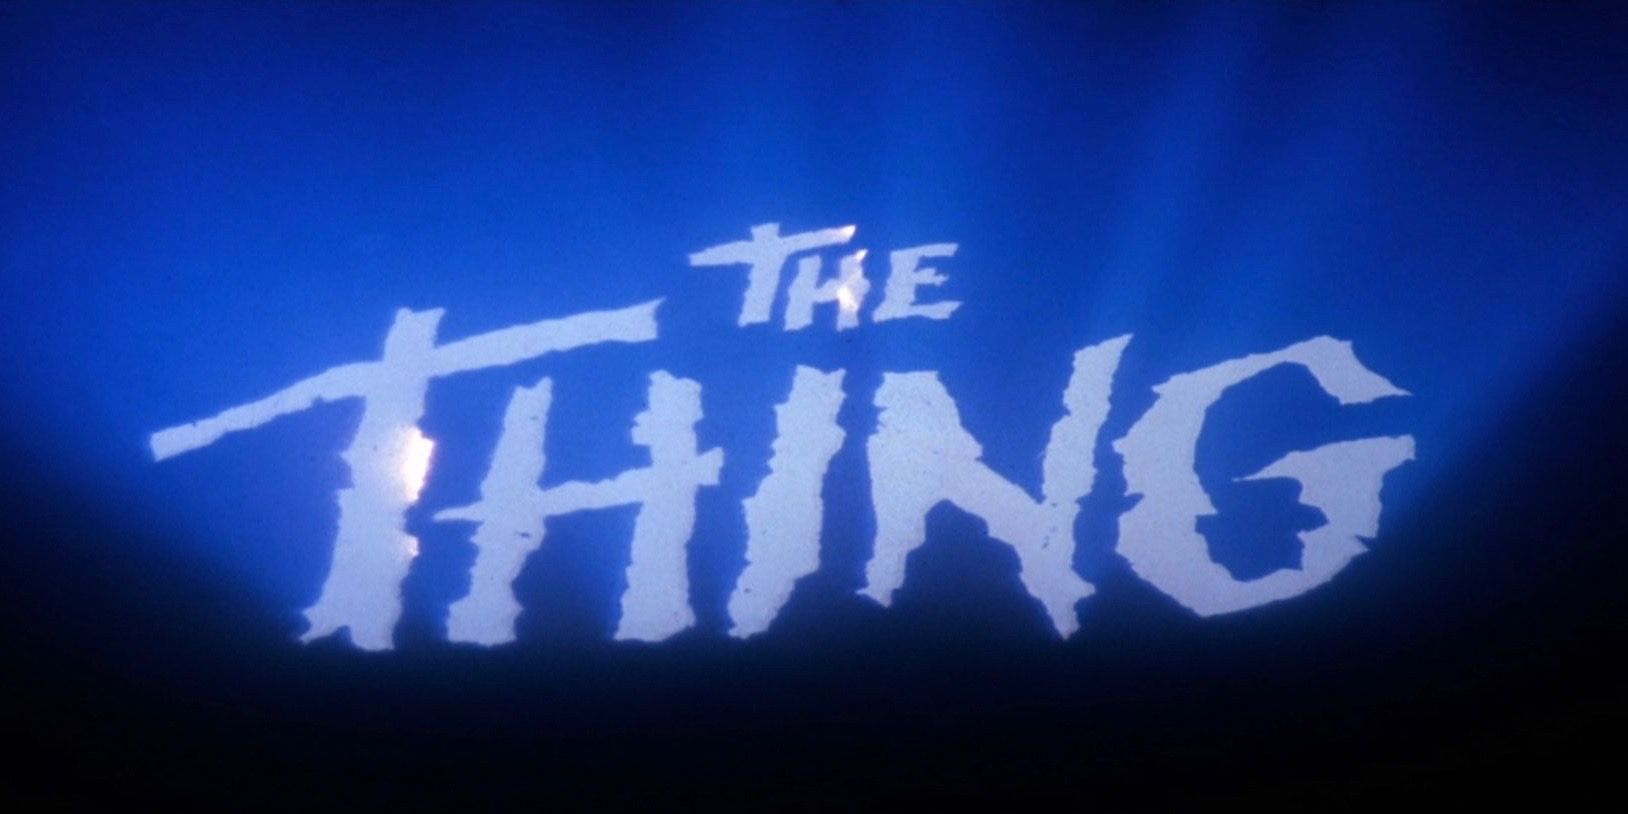 John Carpenter's The Thing.